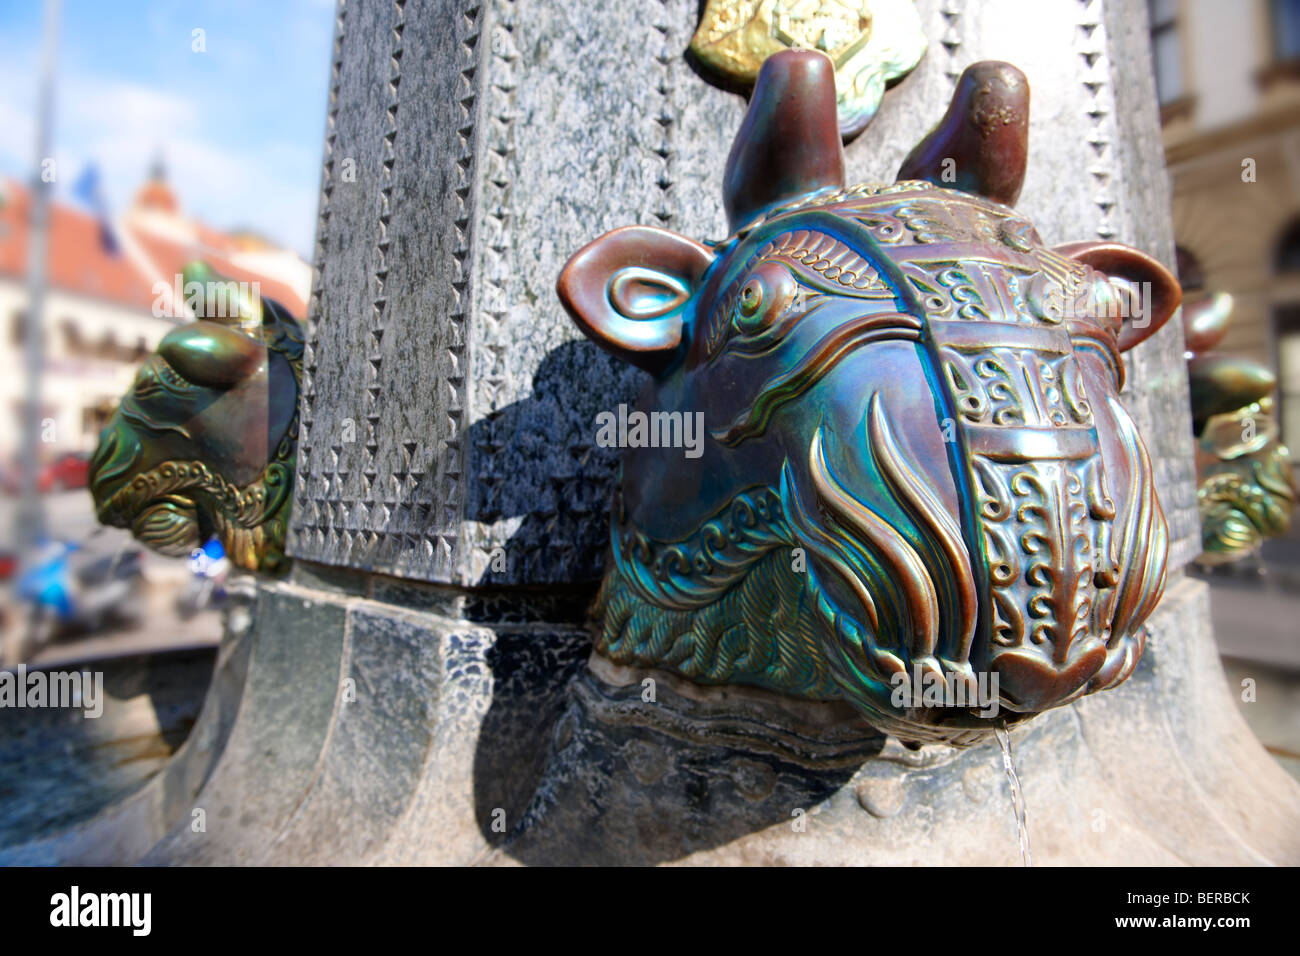 Zsolnay Bull's head fountain, Pecs - European Cultural City of The Year 2010 , Hungary Stock Photo